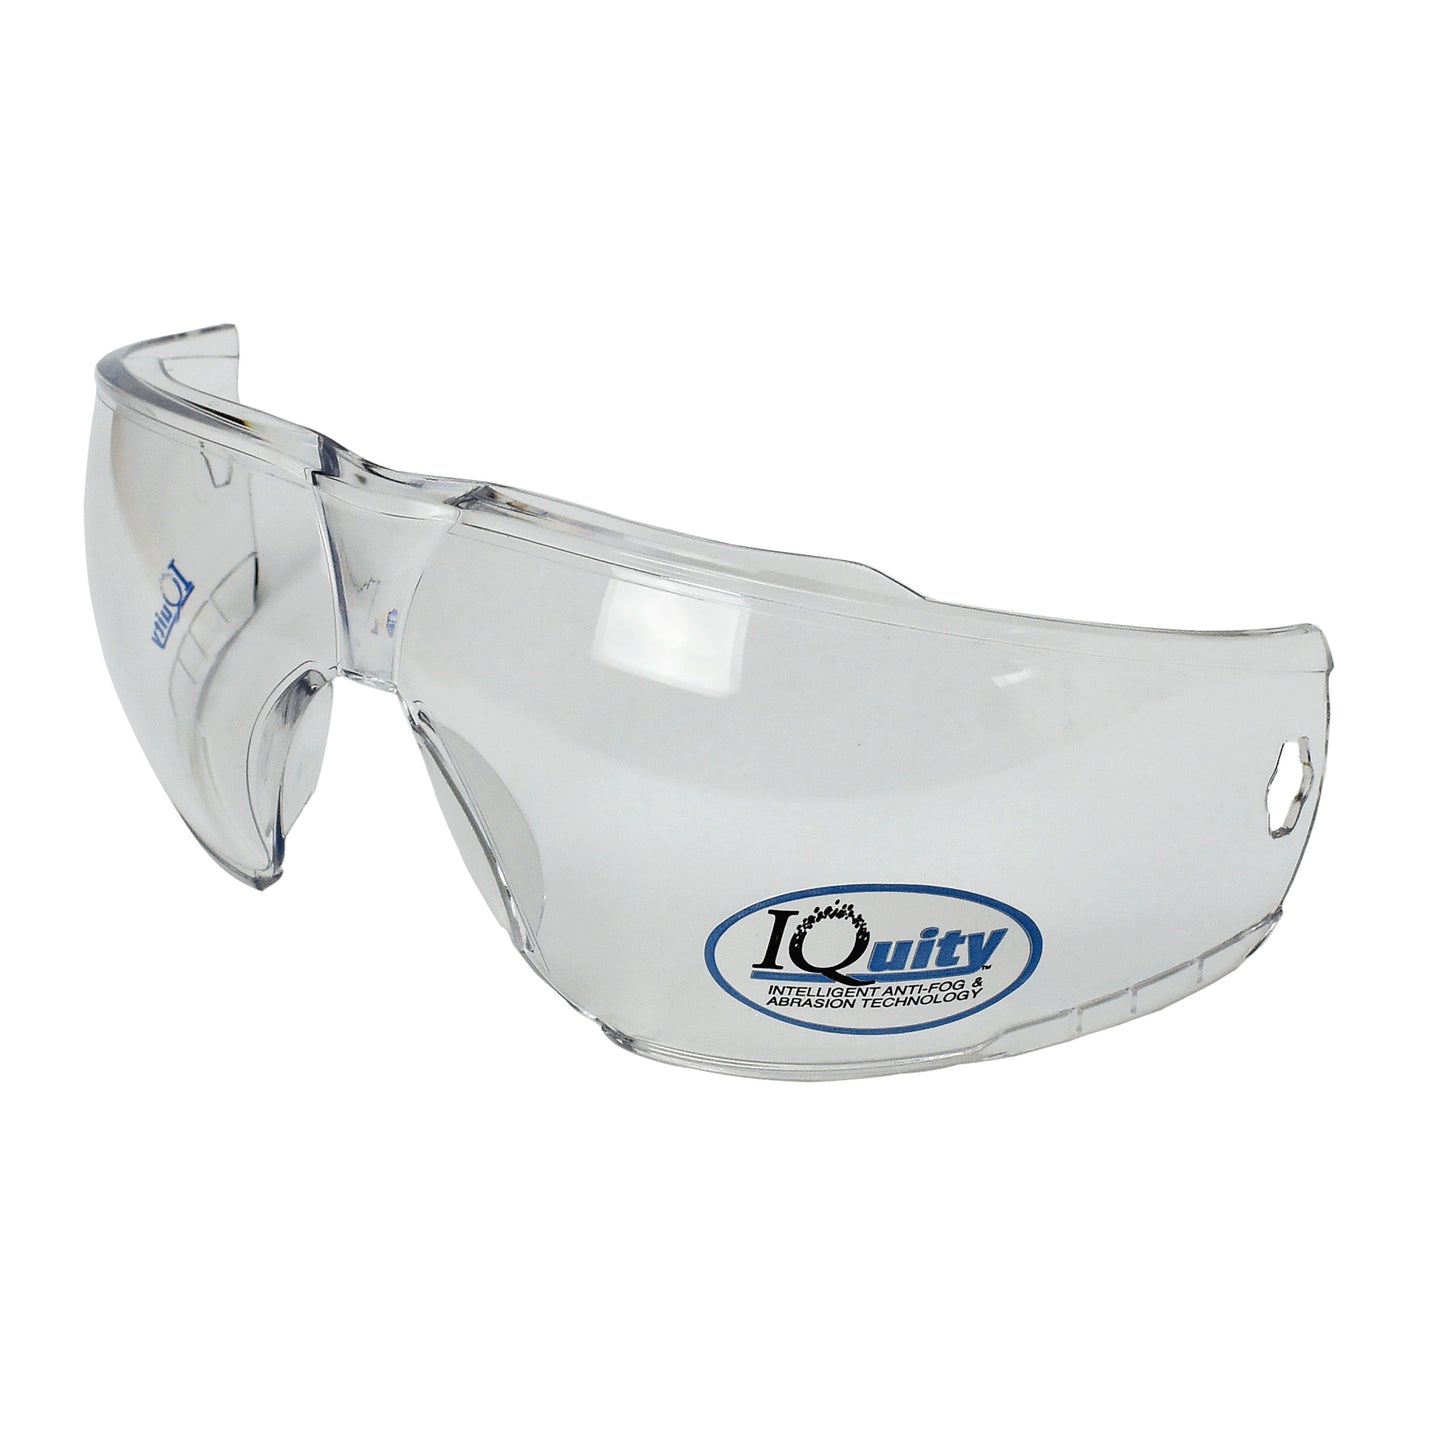 Radians LPX IQuity Goggle Replacement Lens